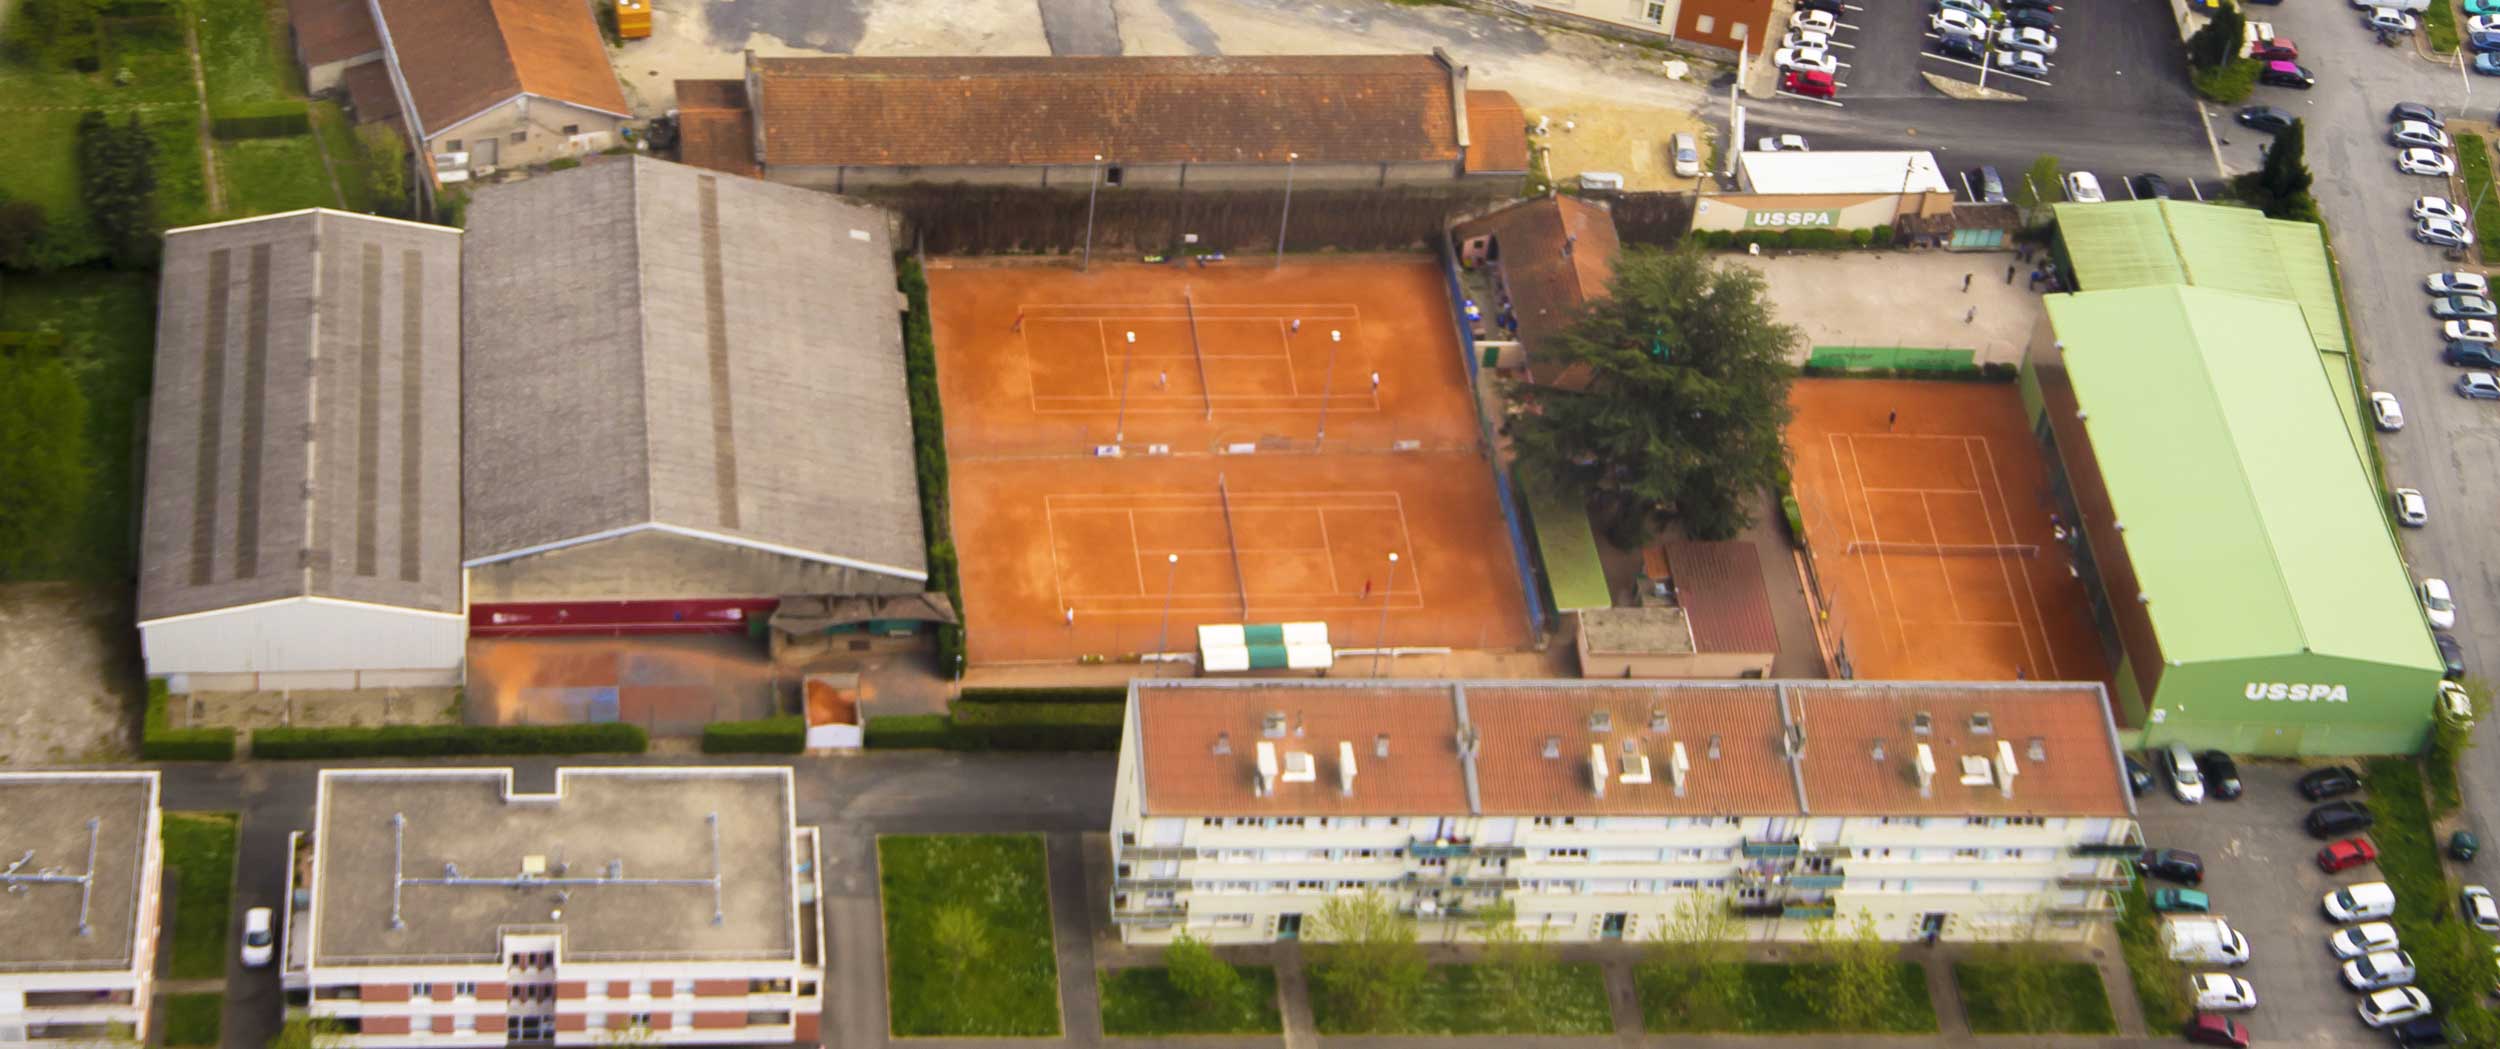 USSPA Tennis Club Albi